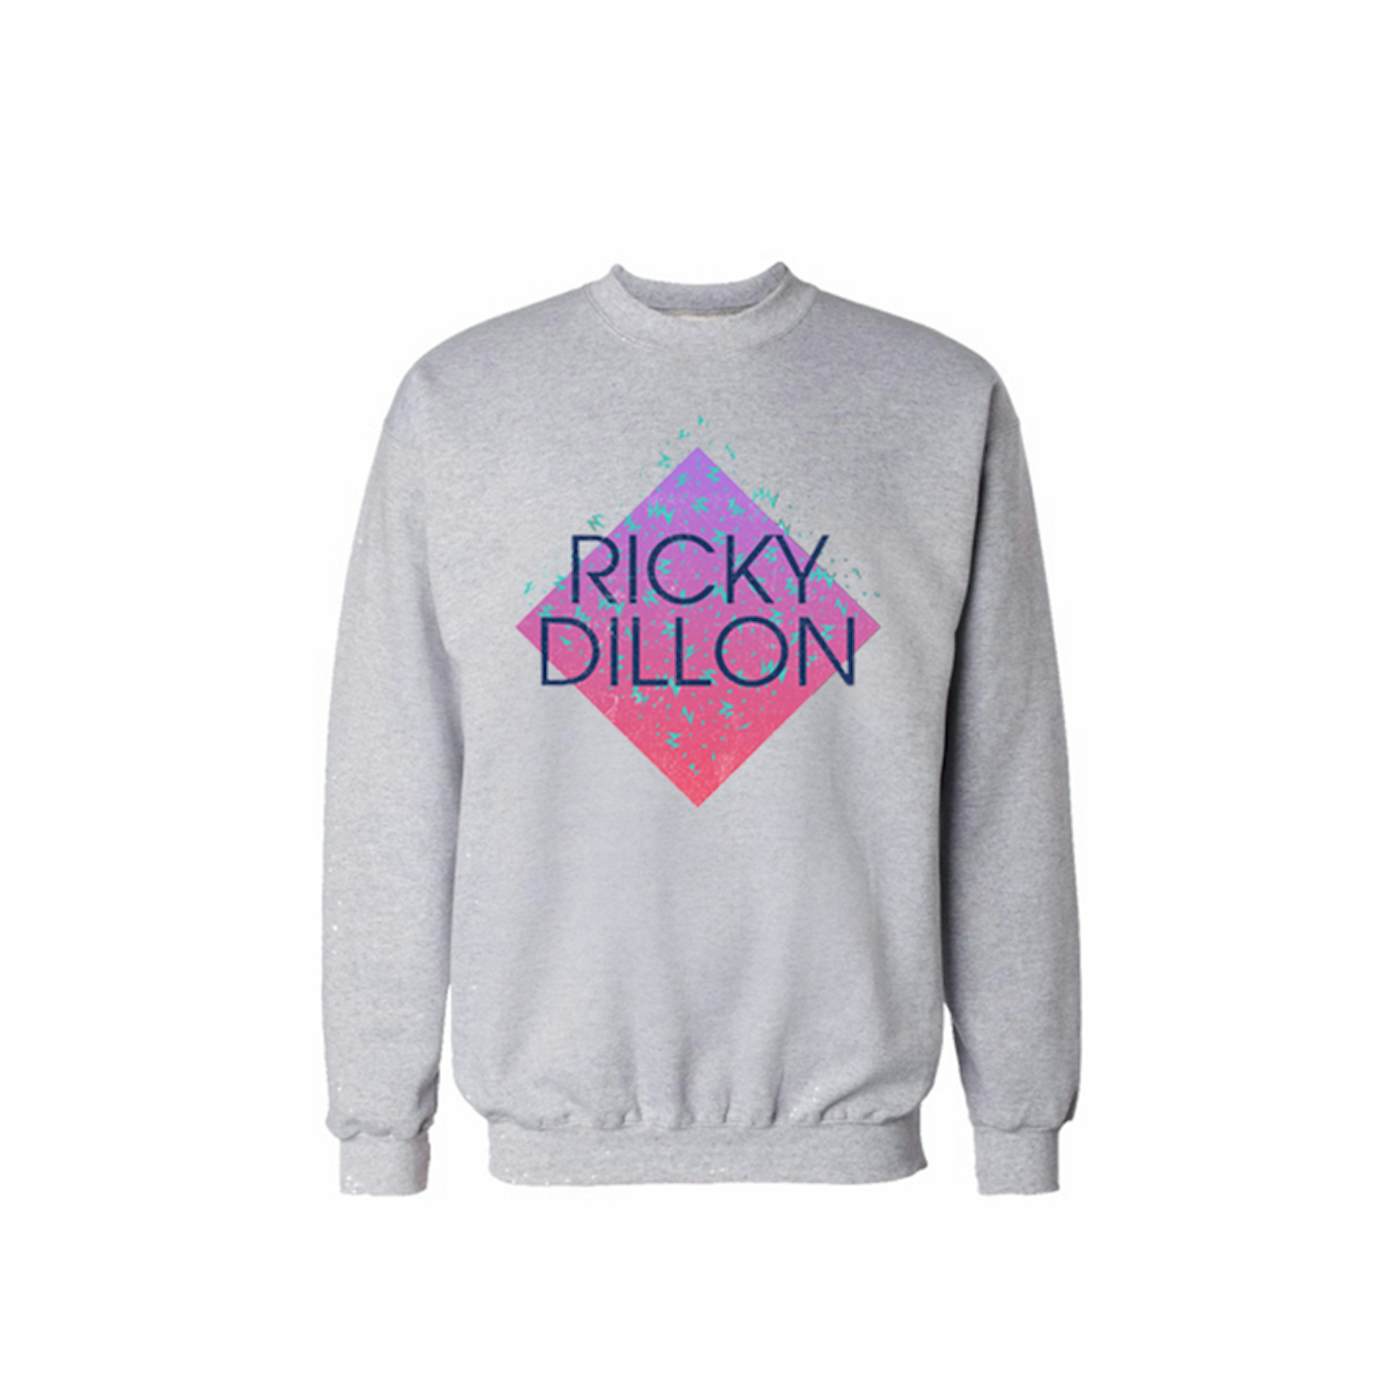 Ricky Dillon Diamond Sweater